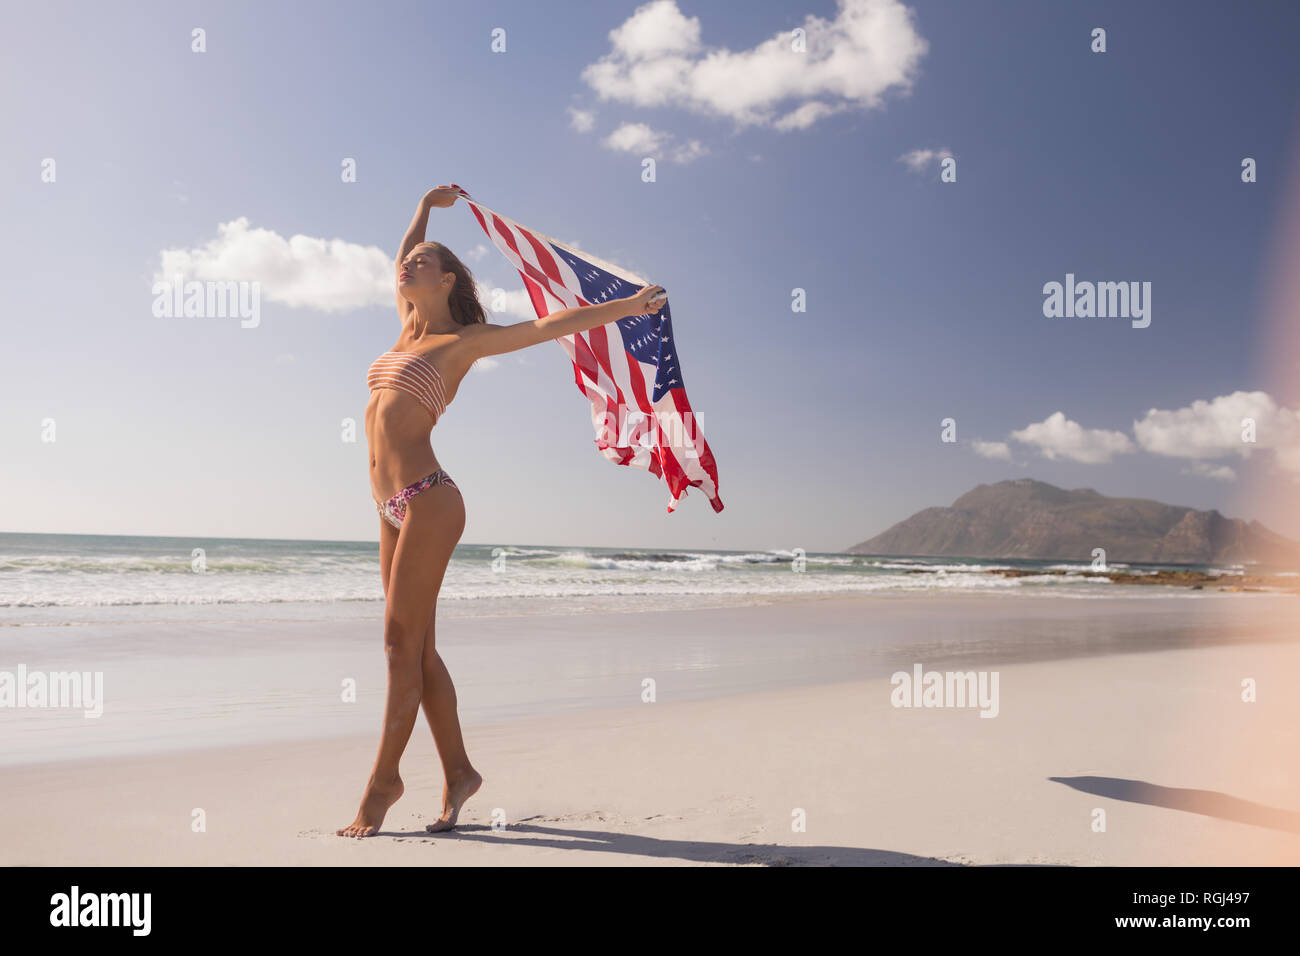 Woman waving American flag at beach Banque D'Images